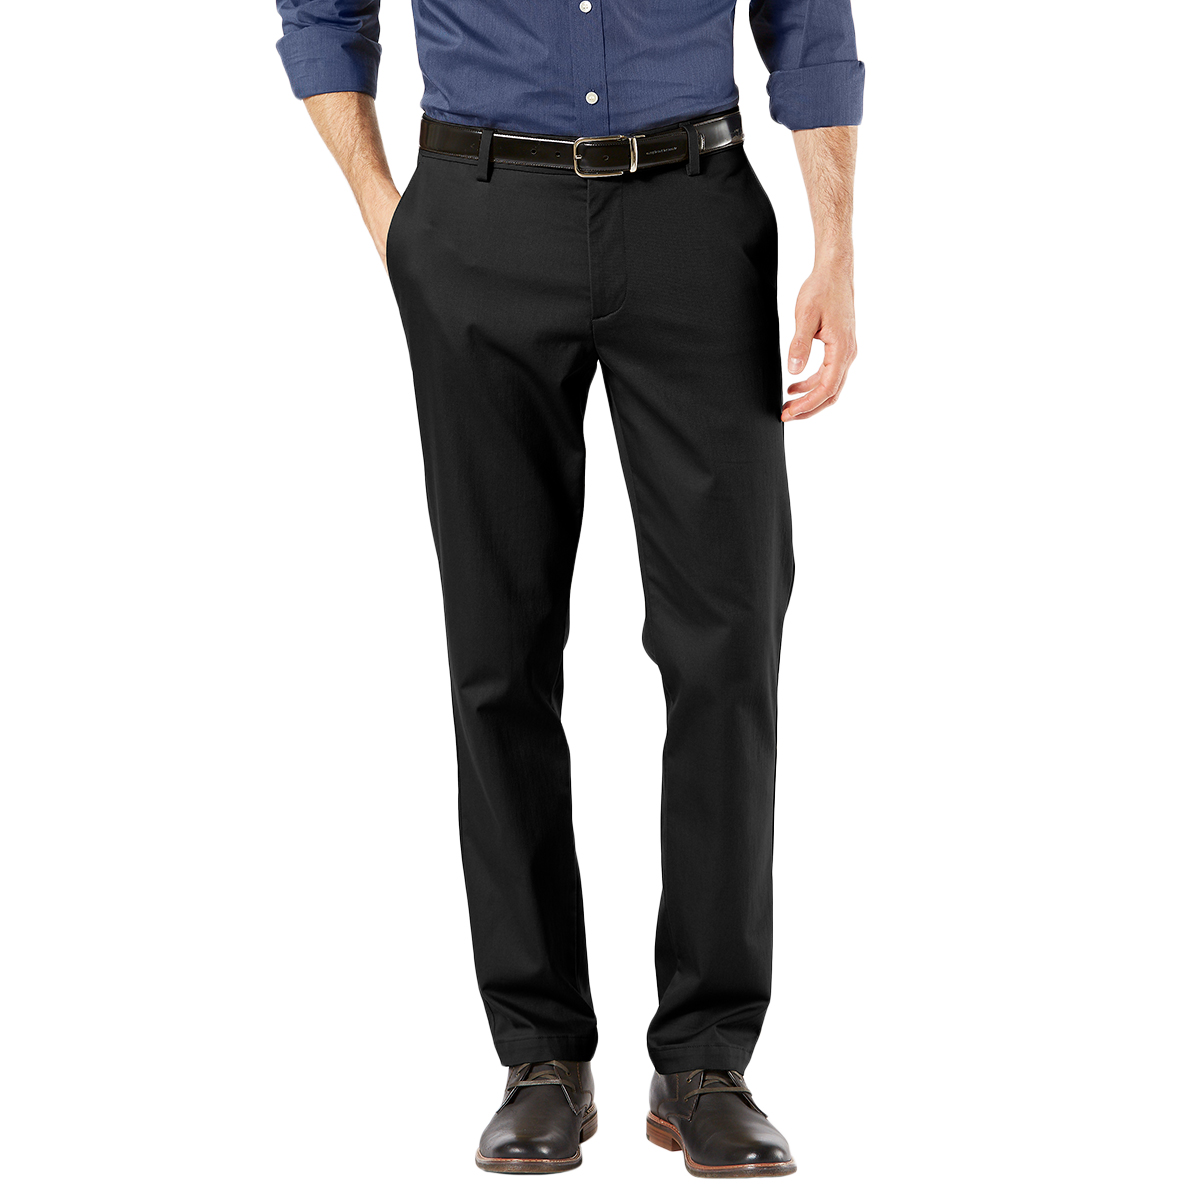 Dockers Men's Signature Khaki 2.0 Stretch Straight Taper Flat-Front Creaseless Pants - Black, 34/29